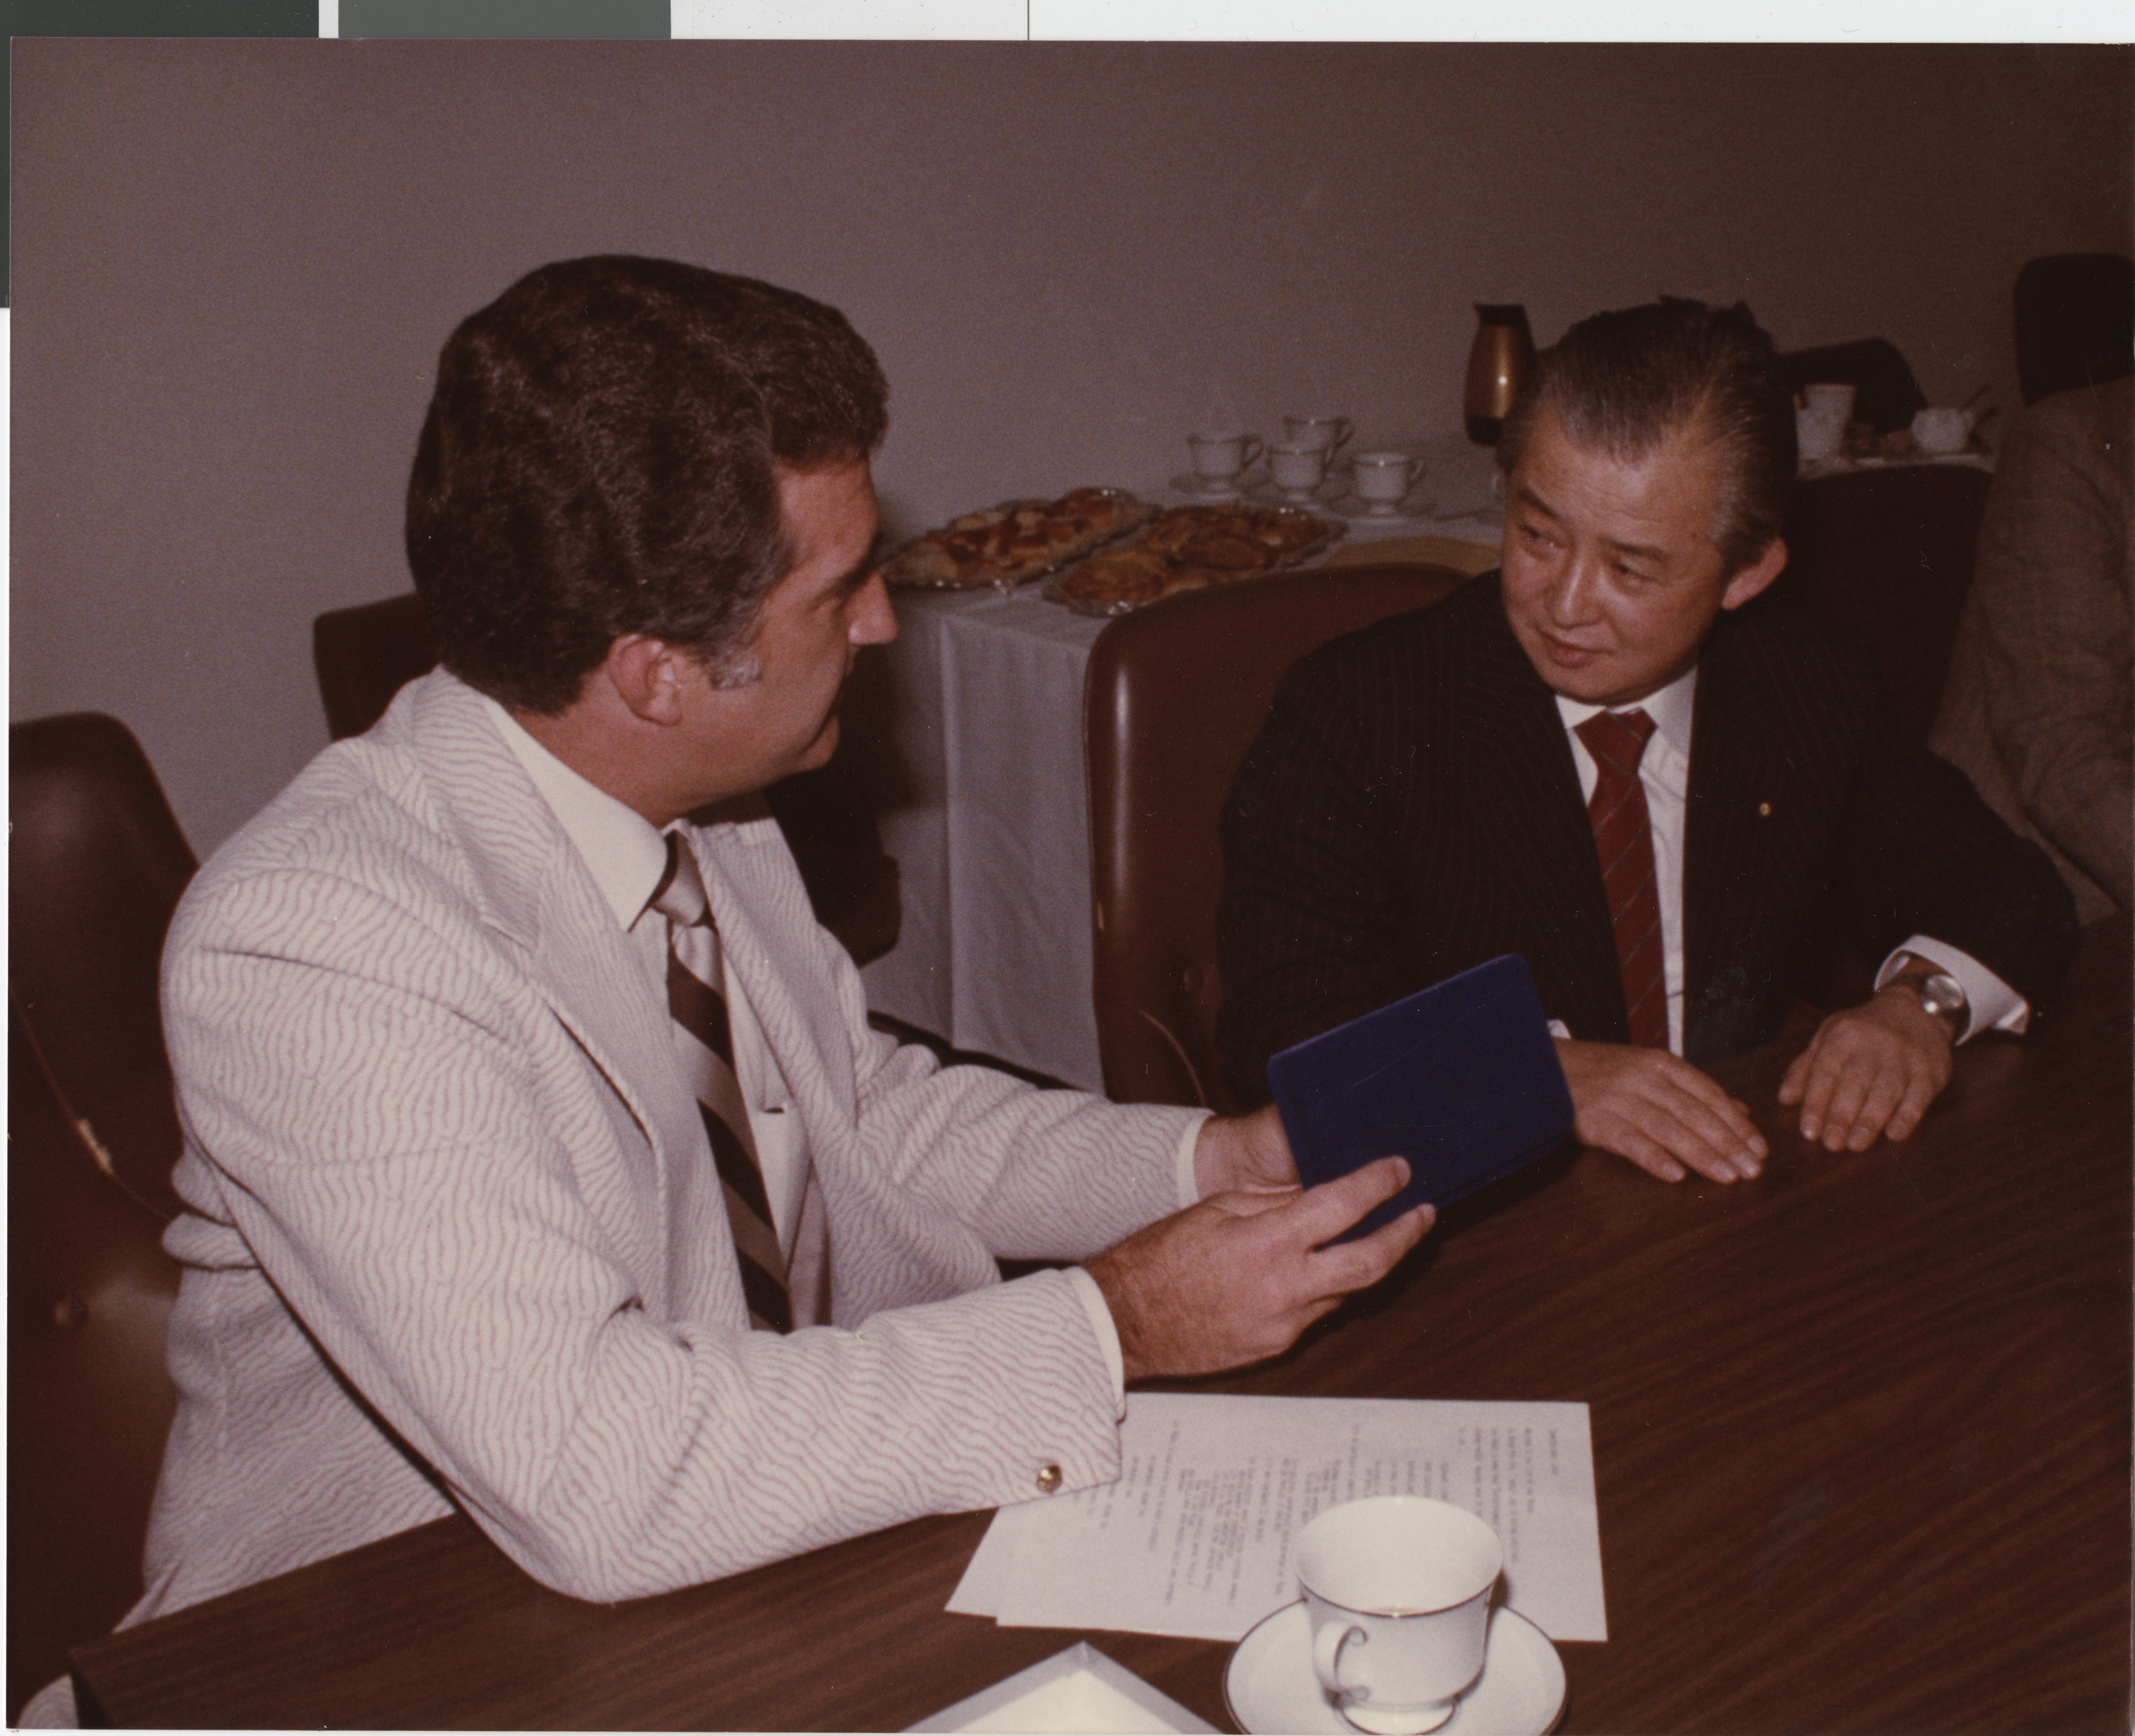 Photograph of Ron Lurie with Yoshiro Hayashi, October 1, 1982